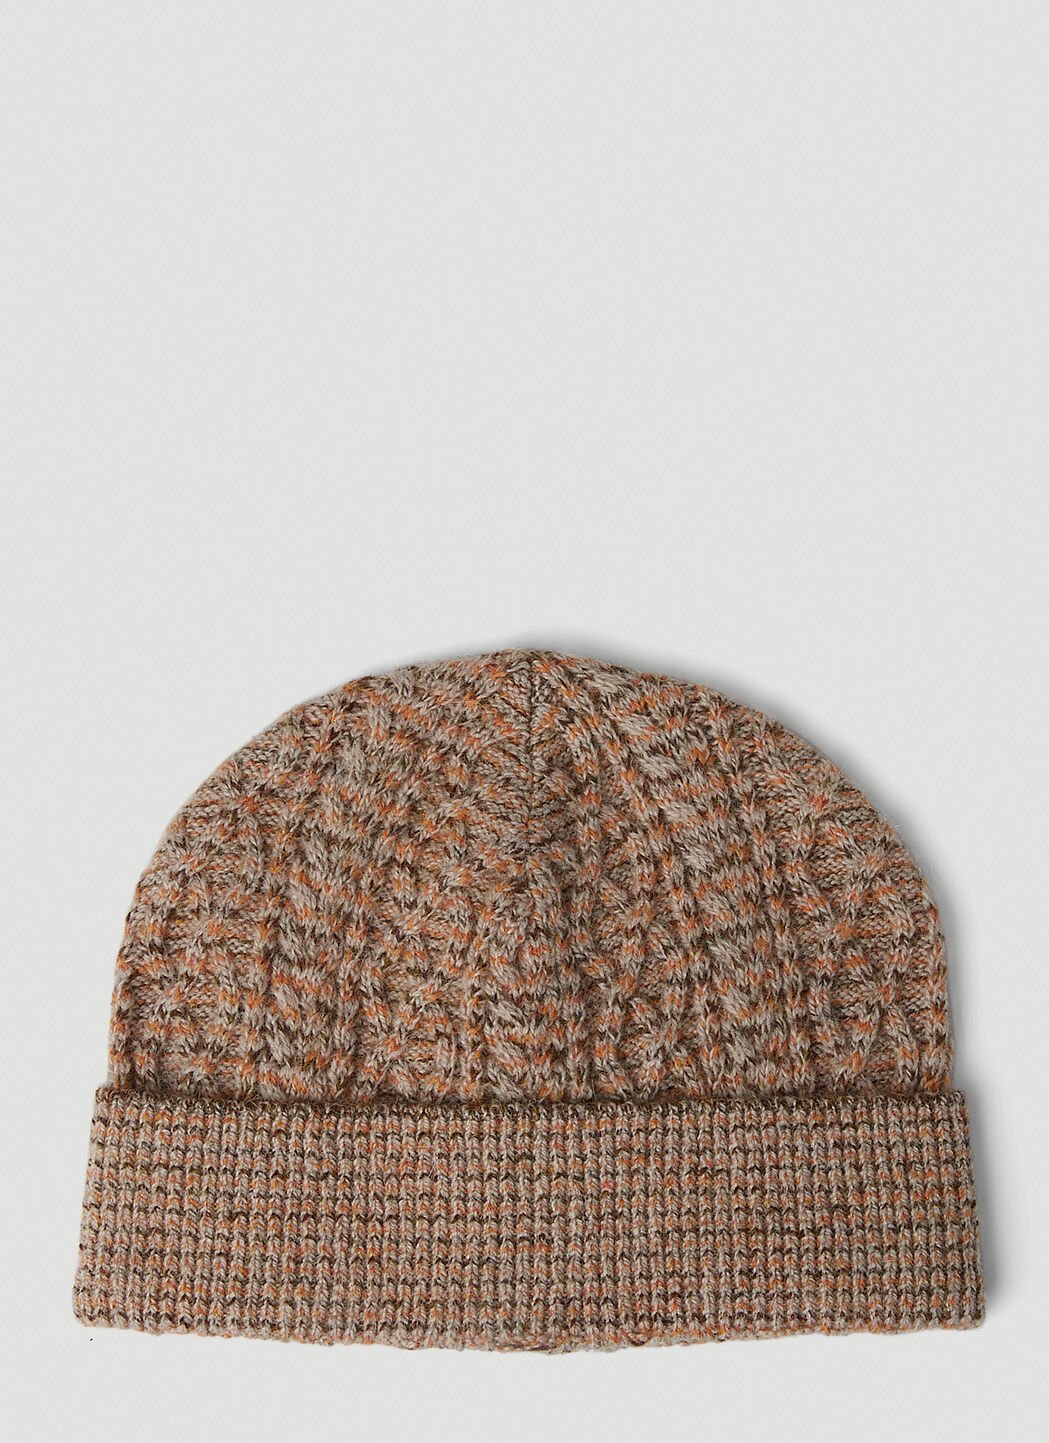 Snow Peak Mixed Knit Beanie Hat Black snp0150025